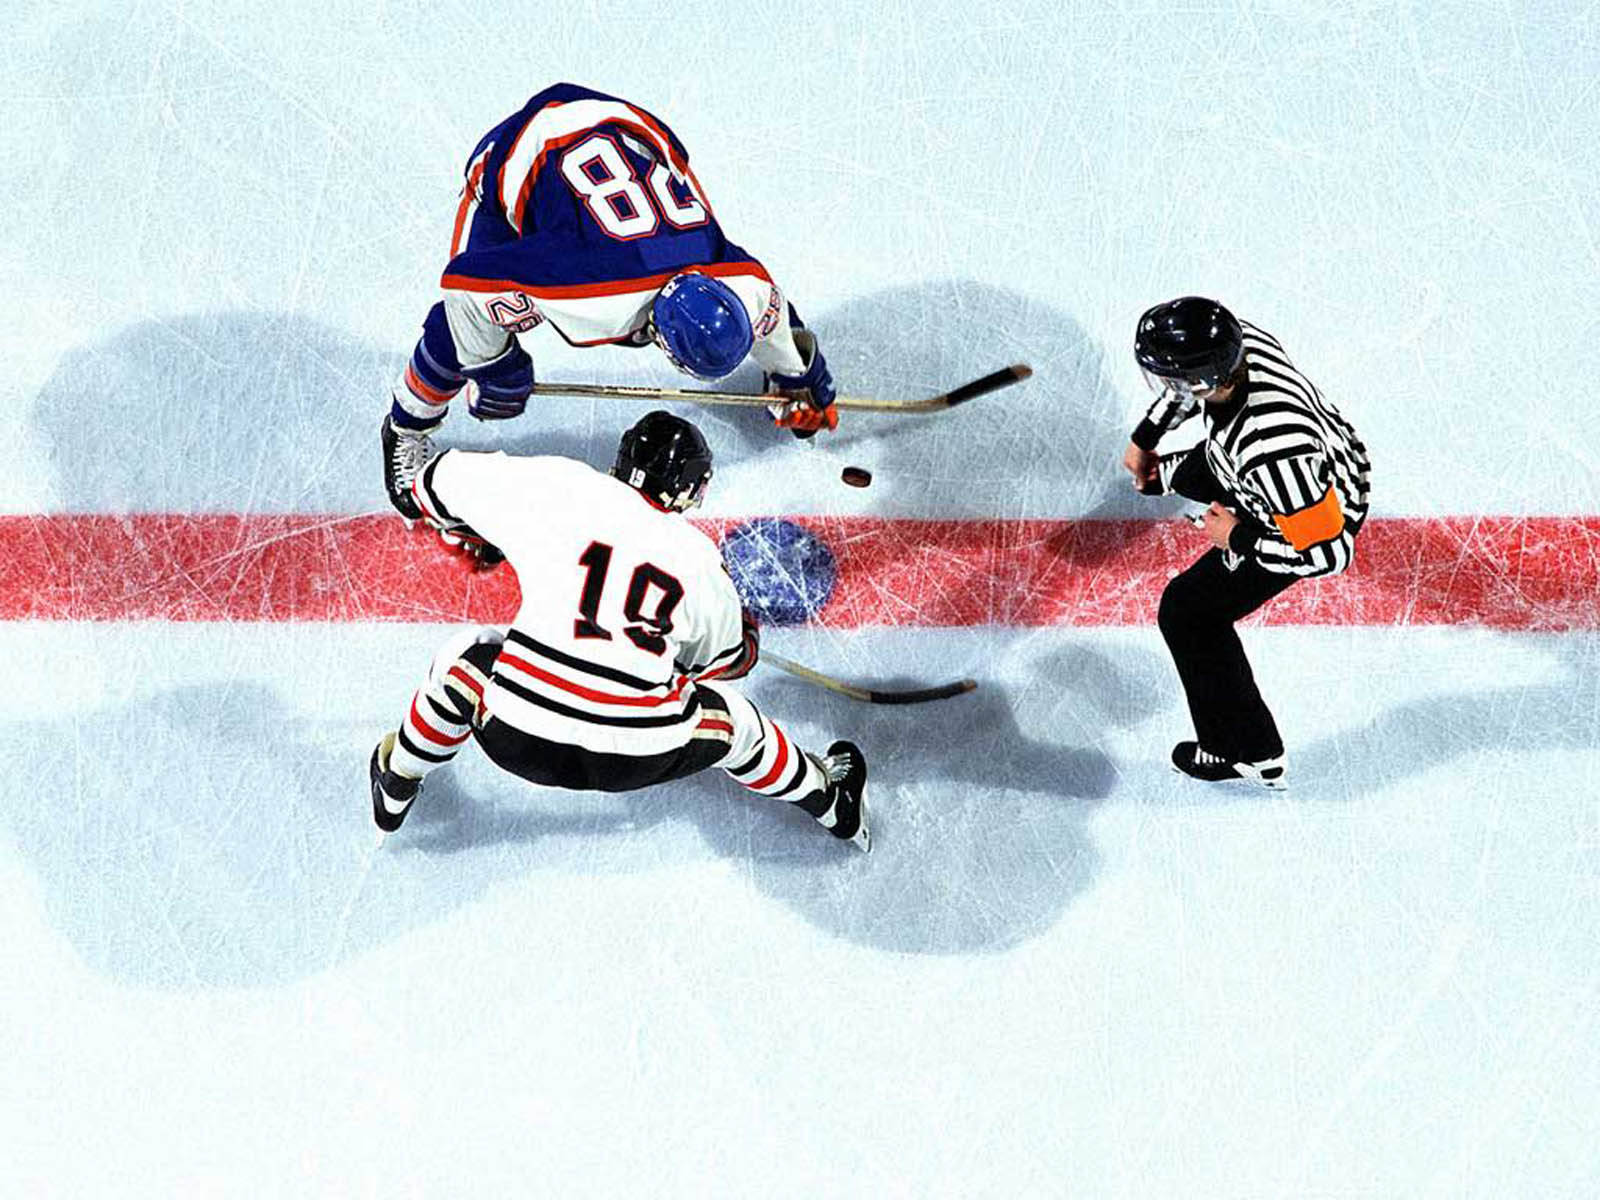 Hockey Puck Flying Through the Air Wallpaper